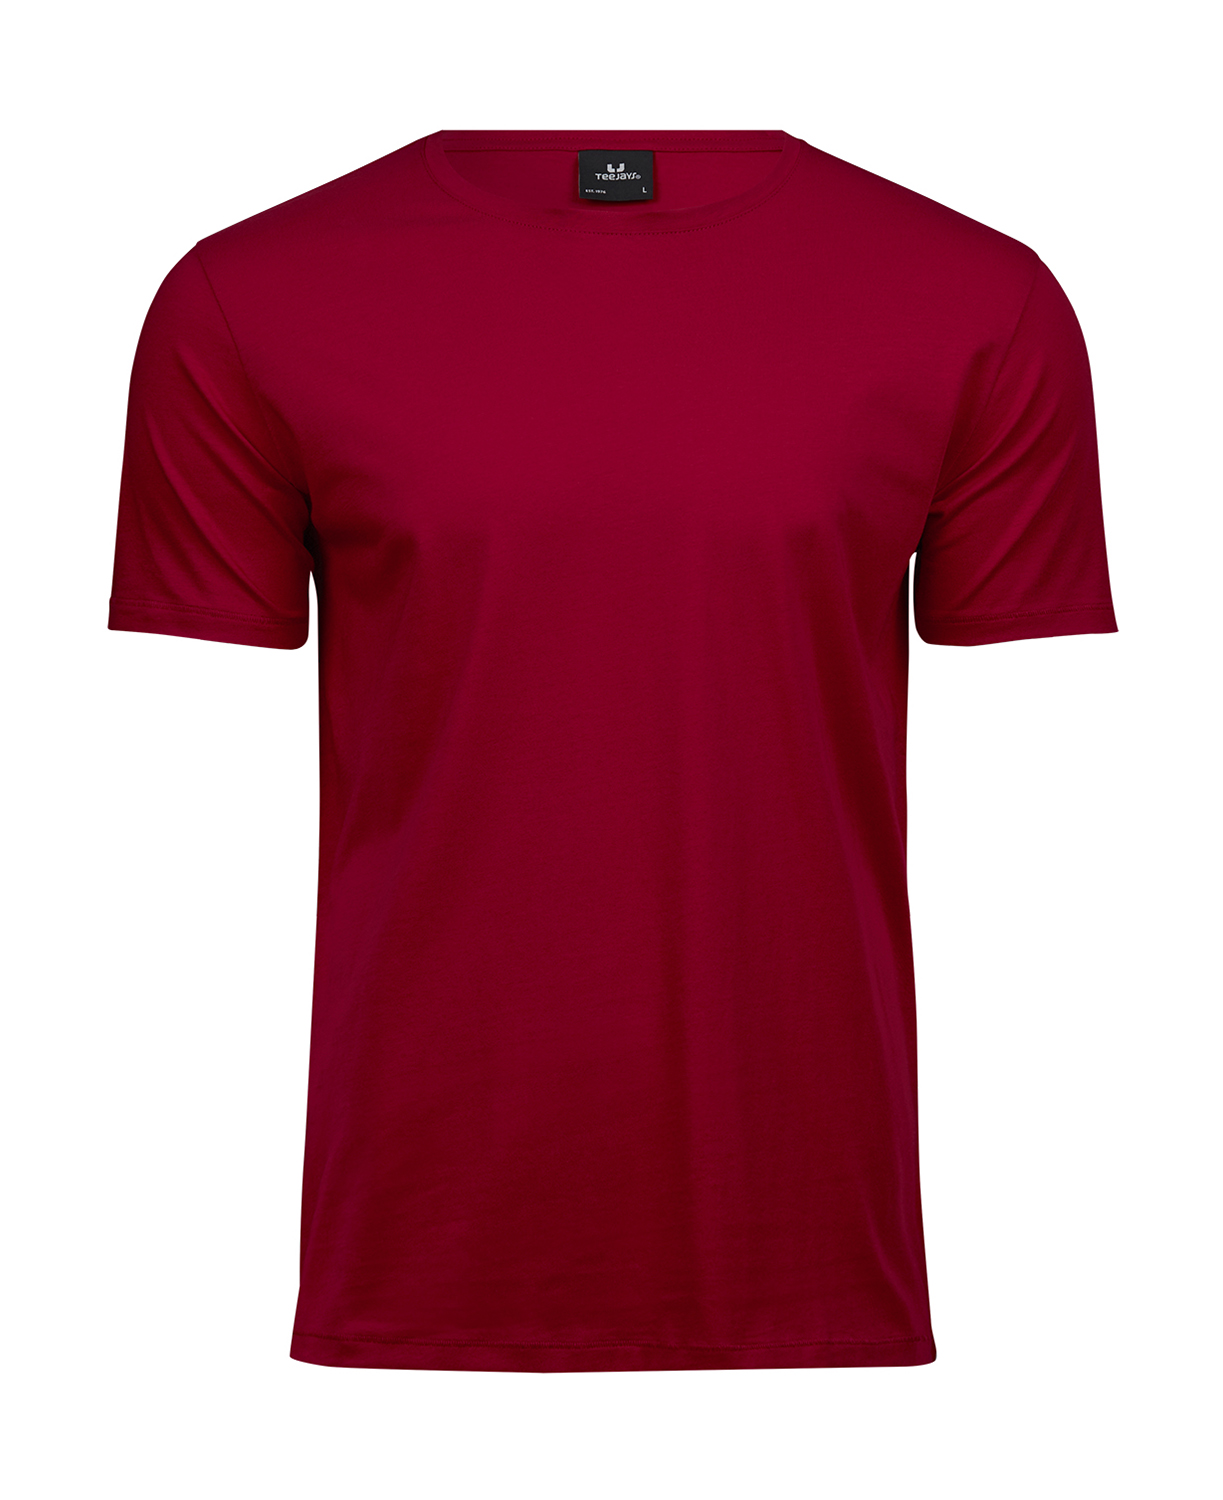 Pánské tričko Luxury Tee Velikost: XL, Barva: Červená